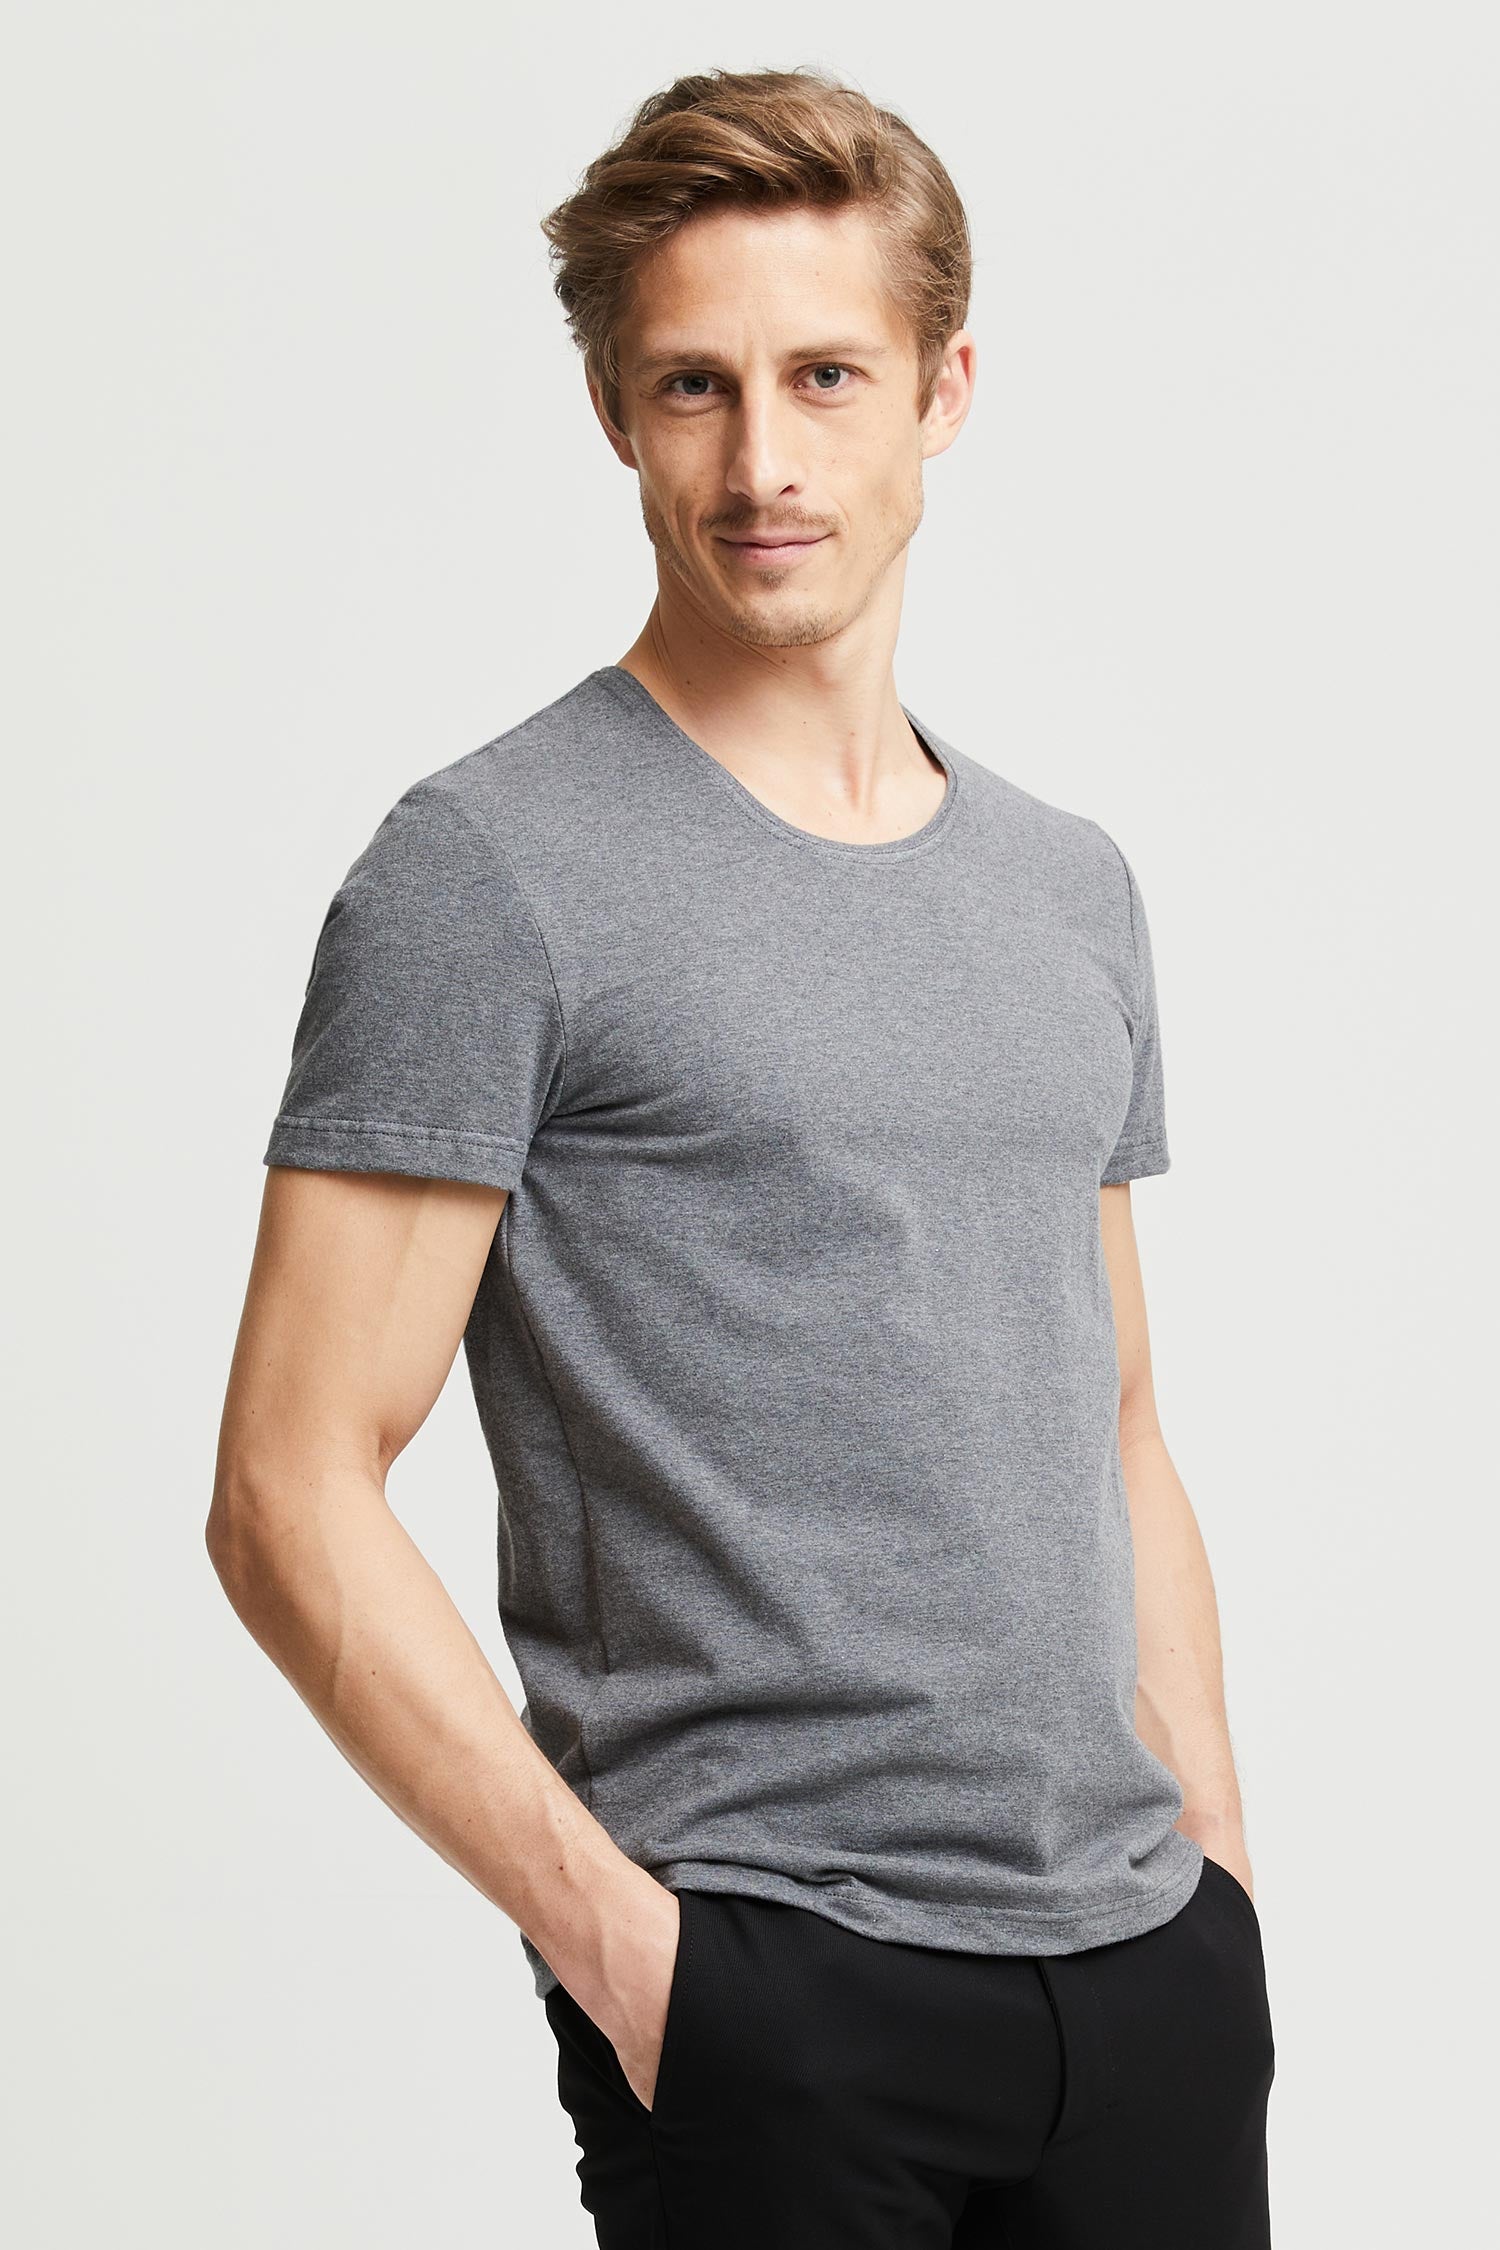 Frenn Henri sustainable premium quality GOTS organic cotton t-shirt grey